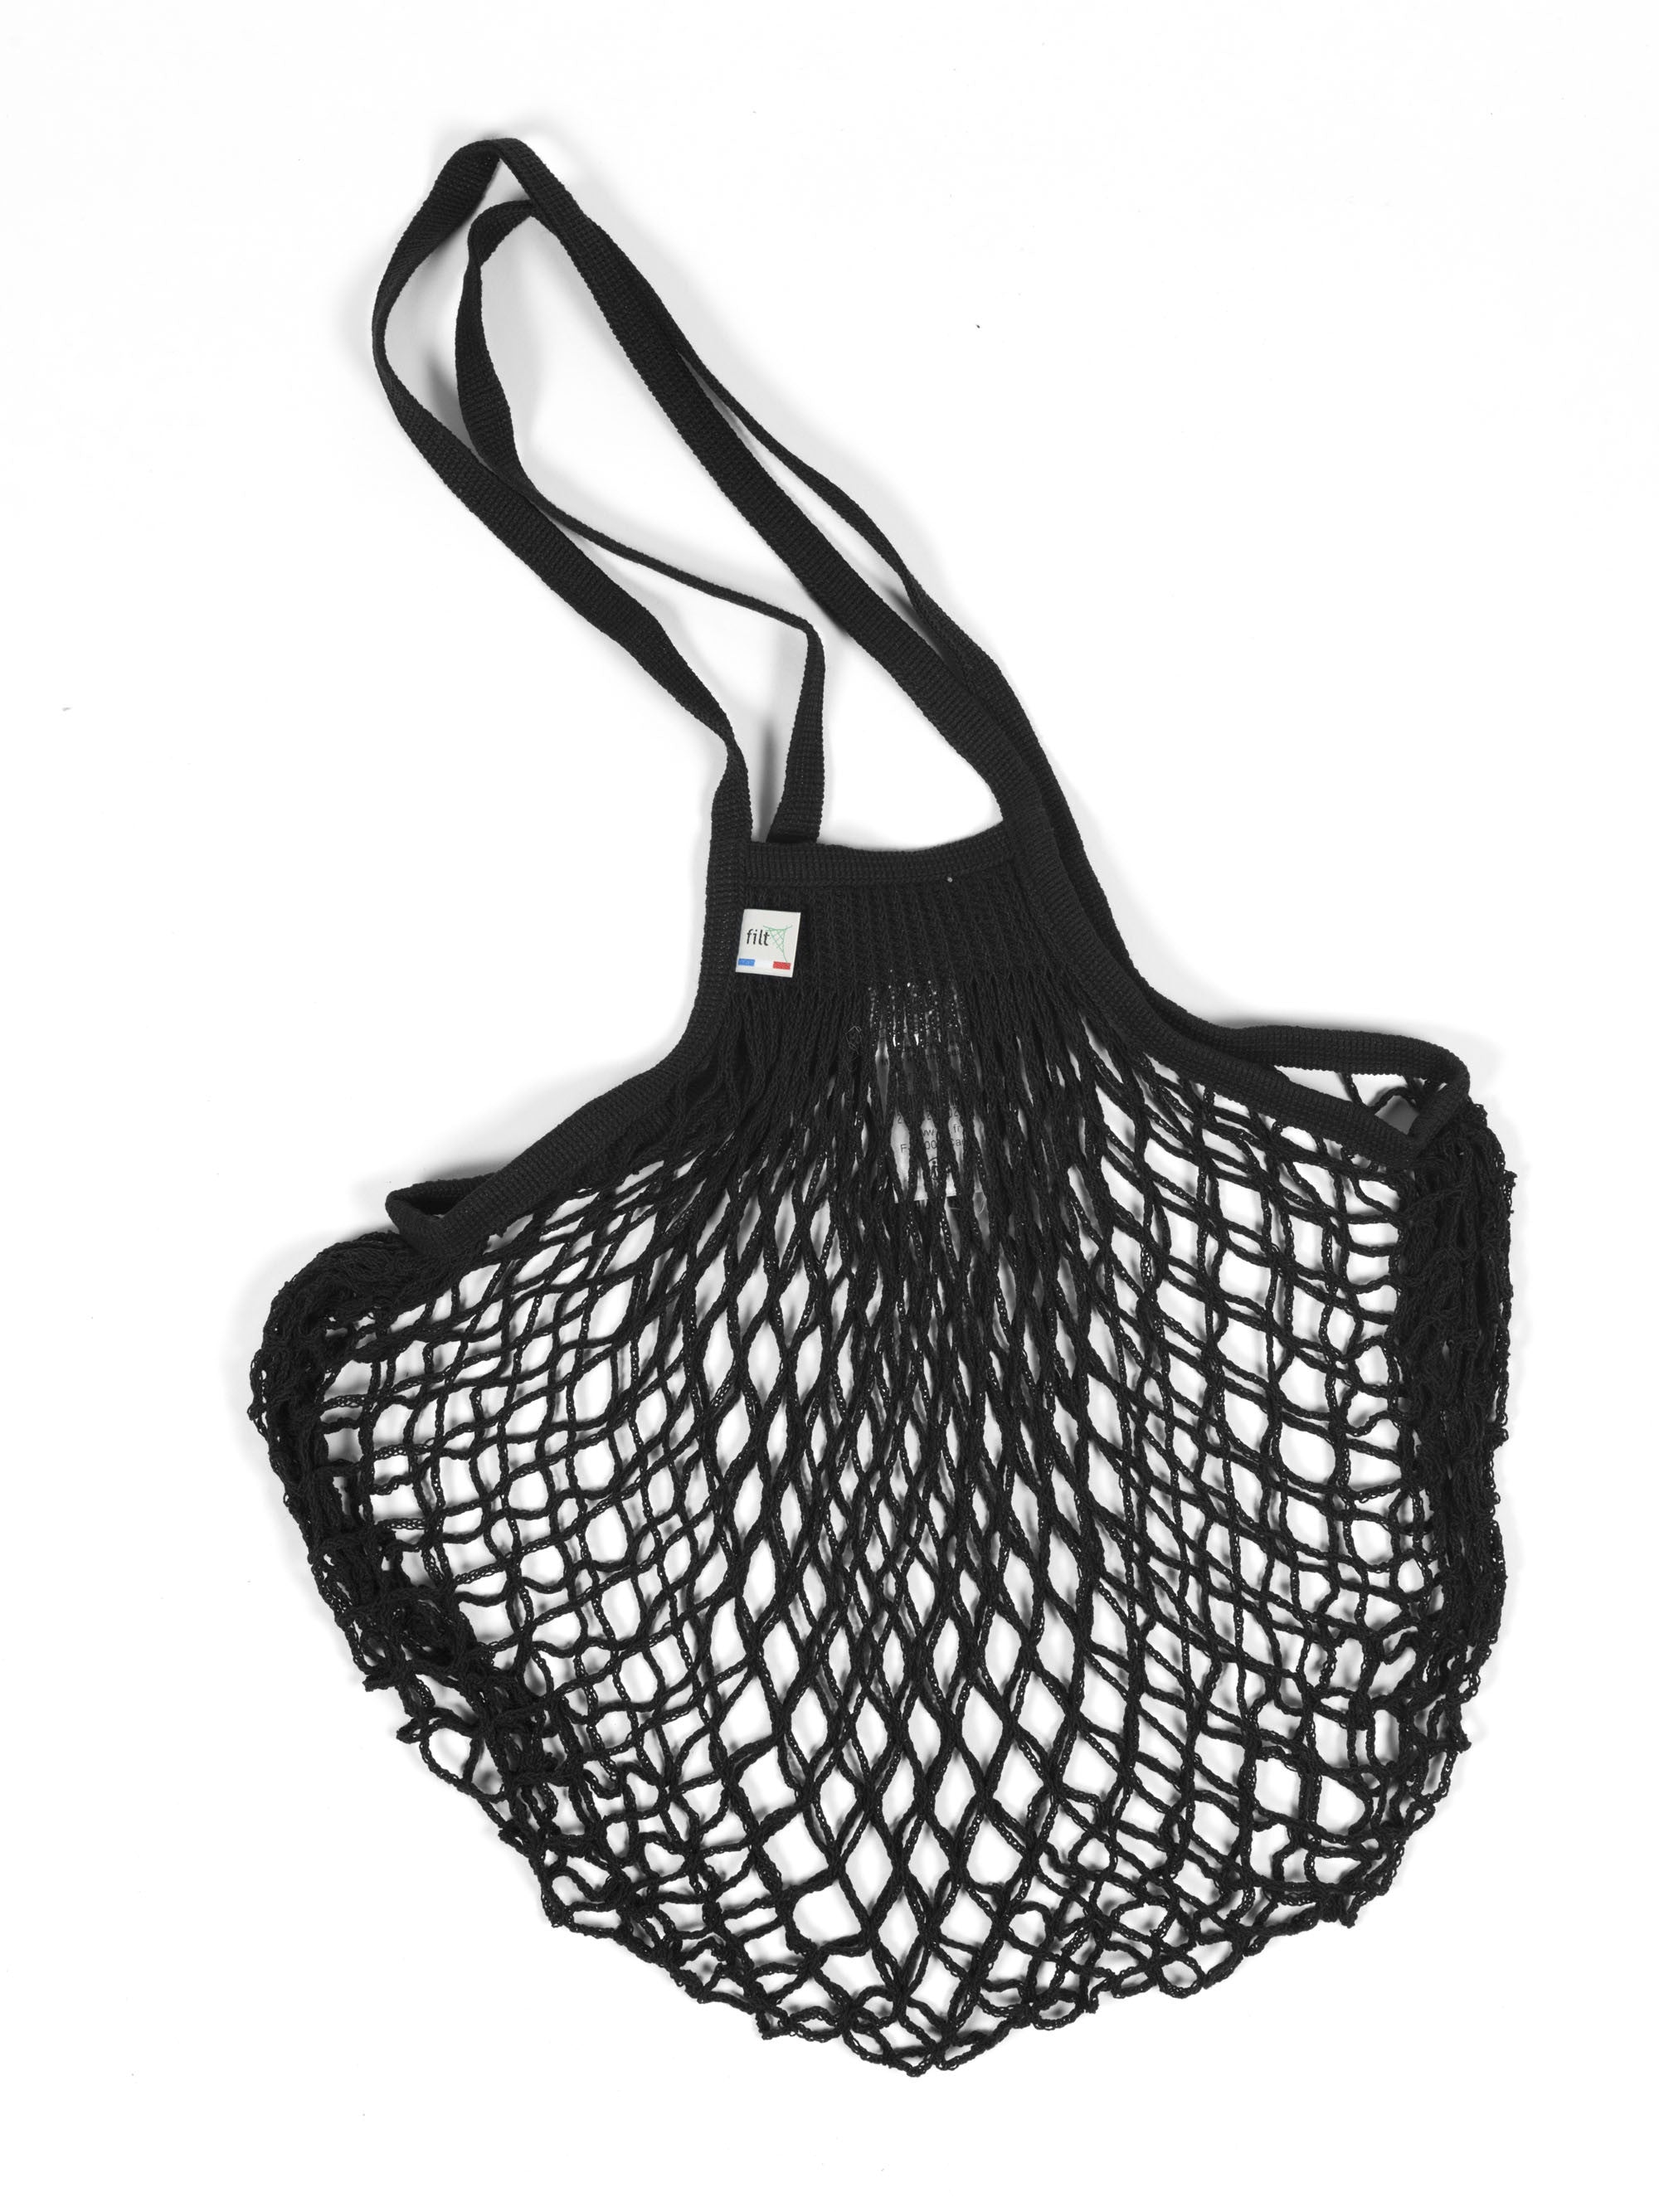 Filt Medium Bag in Black Bag Filt Bags Brand_Filt Shopping Bags Textiles_Shoppers 2200-220BLKMe_Medium_Black_A